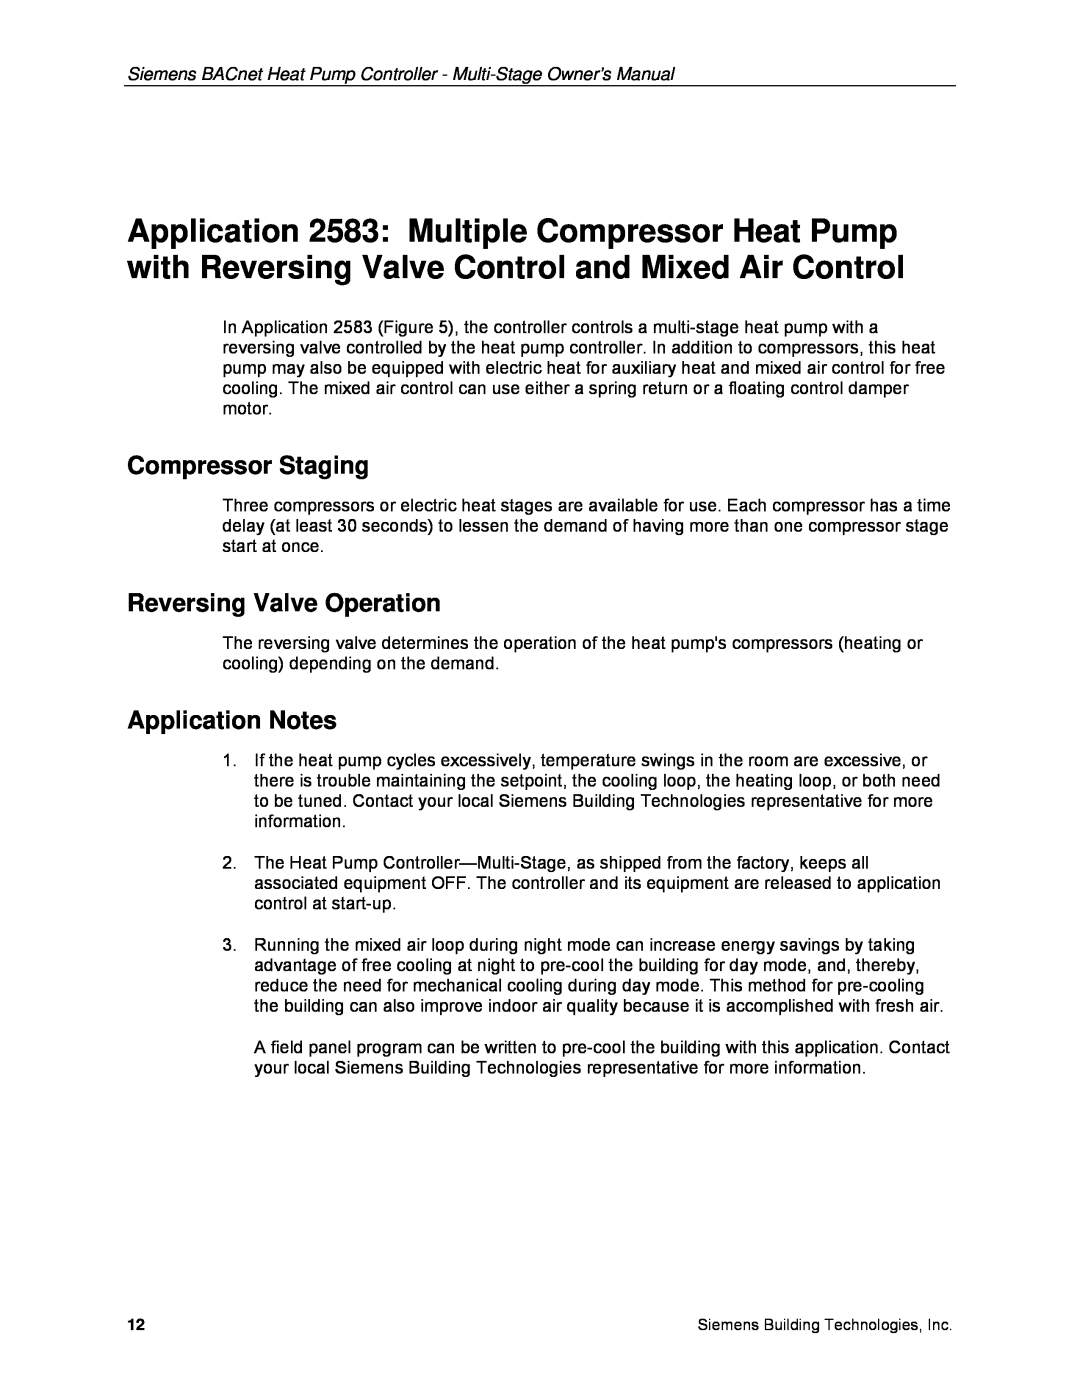 Siemens 125-699 Compressor Staging, Reversing Valve Operation, Application Notes, Siemens Building Technologies, Inc 